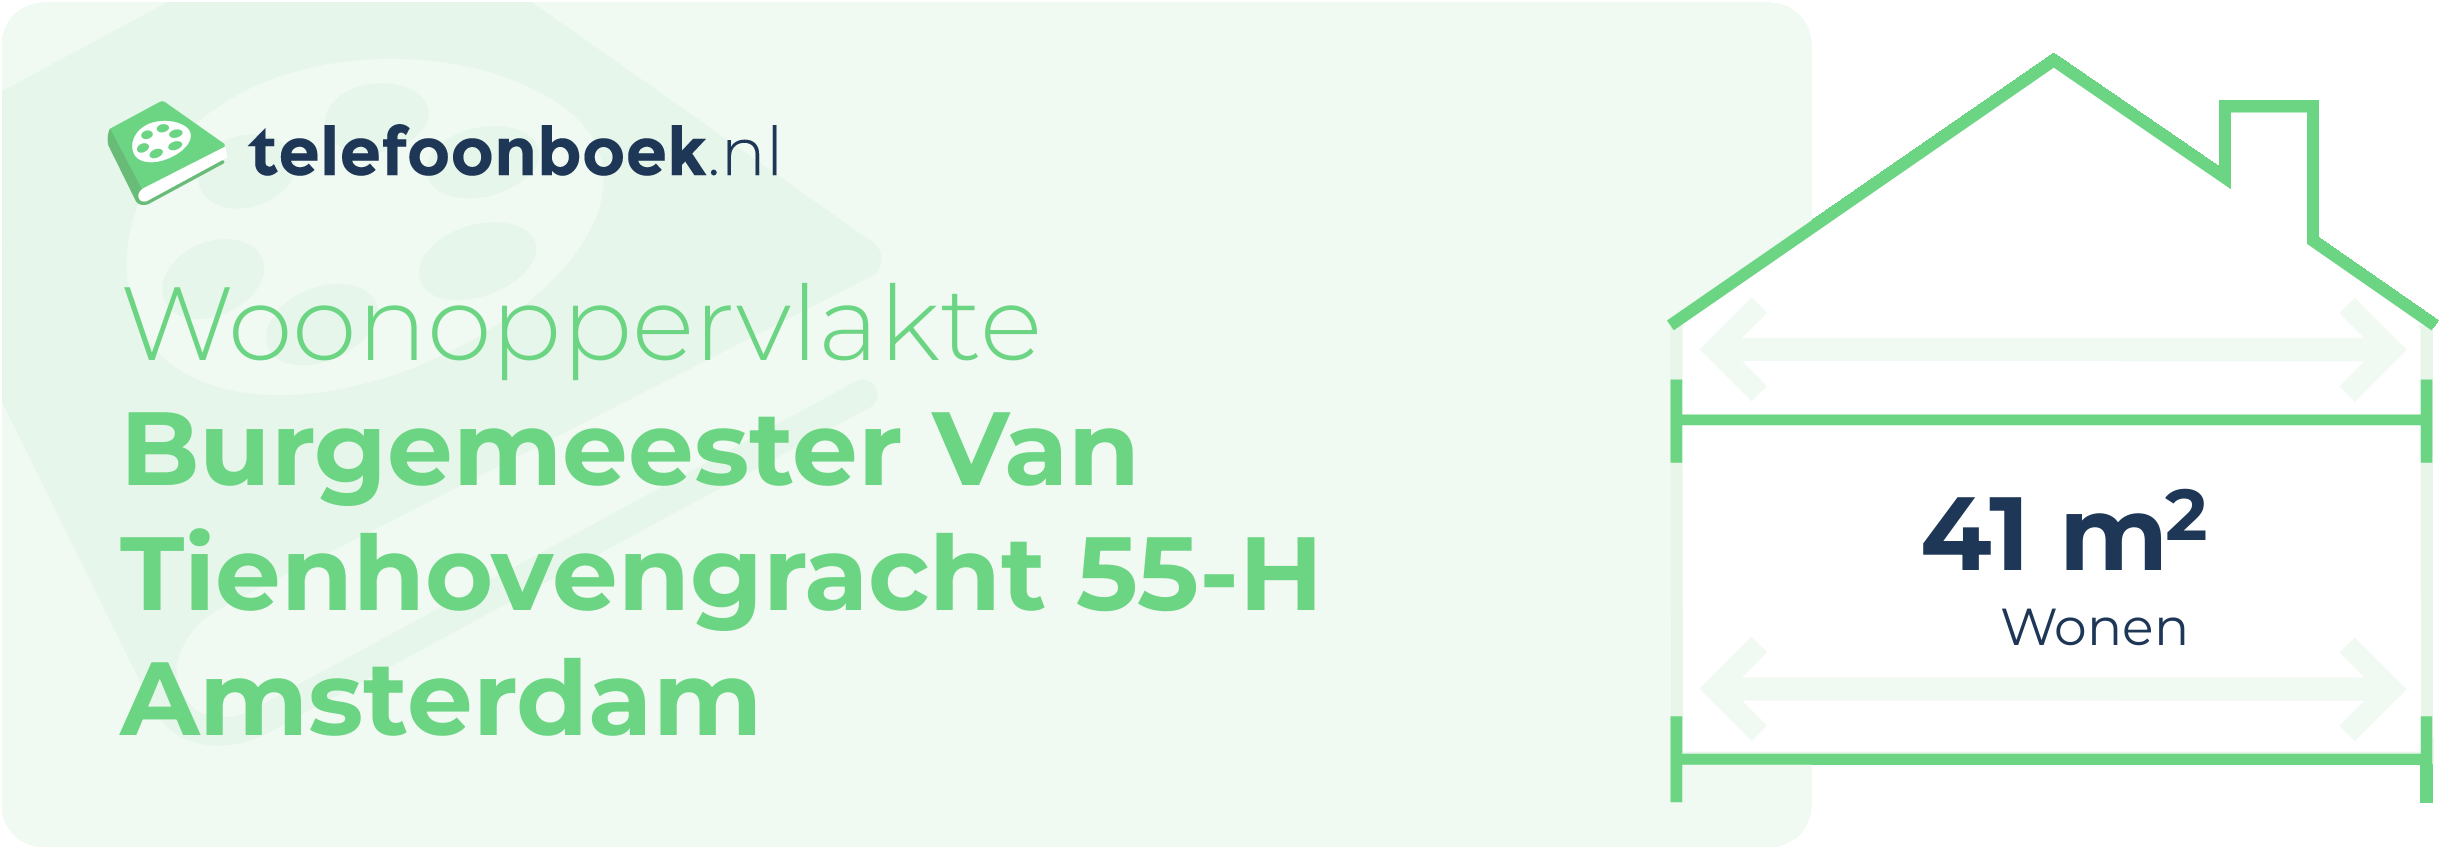 Woonoppervlakte Burgemeester Van Tienhovengracht 55-H Amsterdam